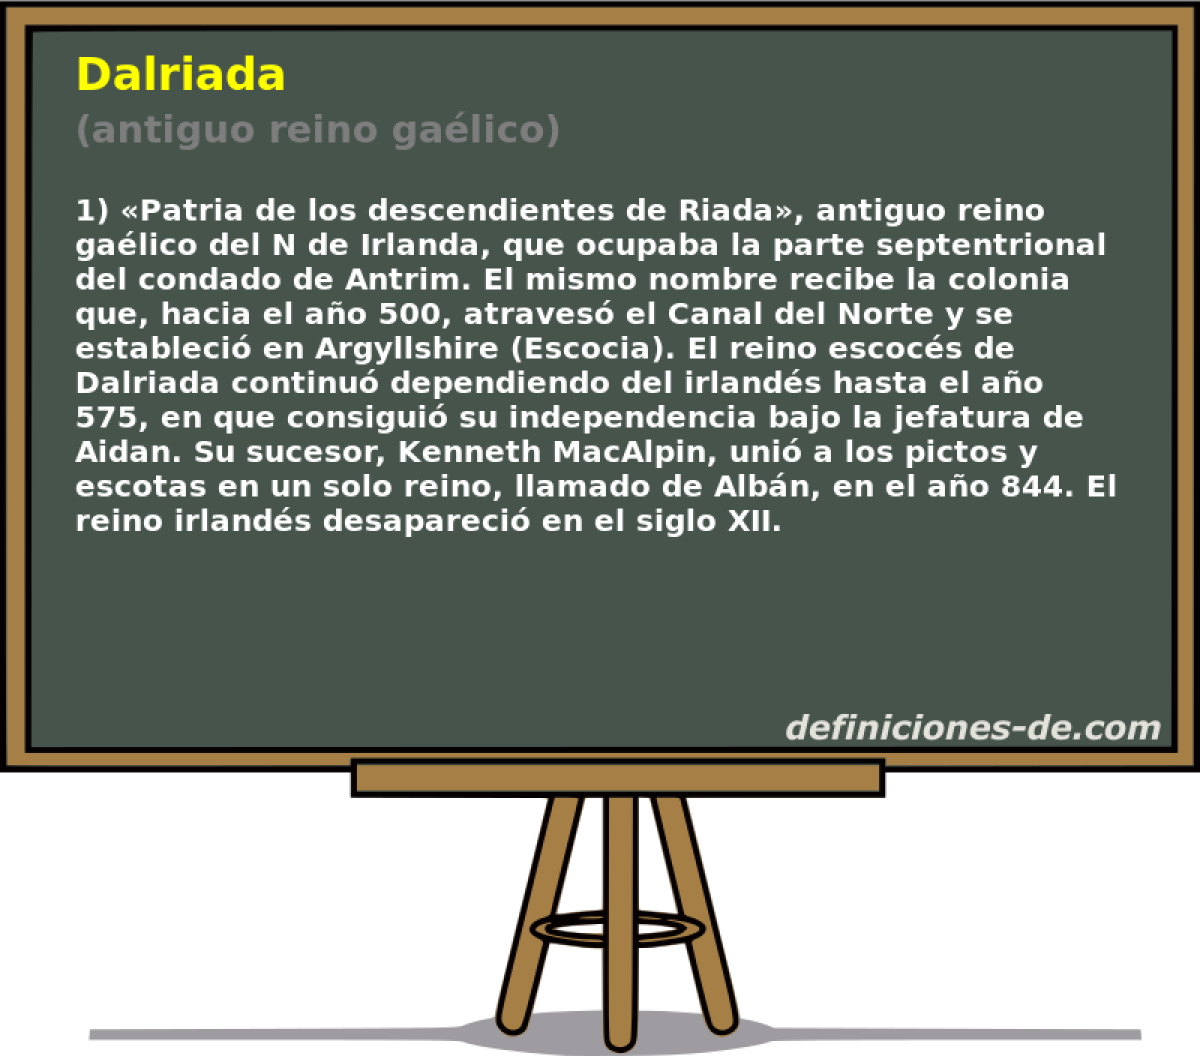 Dalriada (antiguo reino galico)